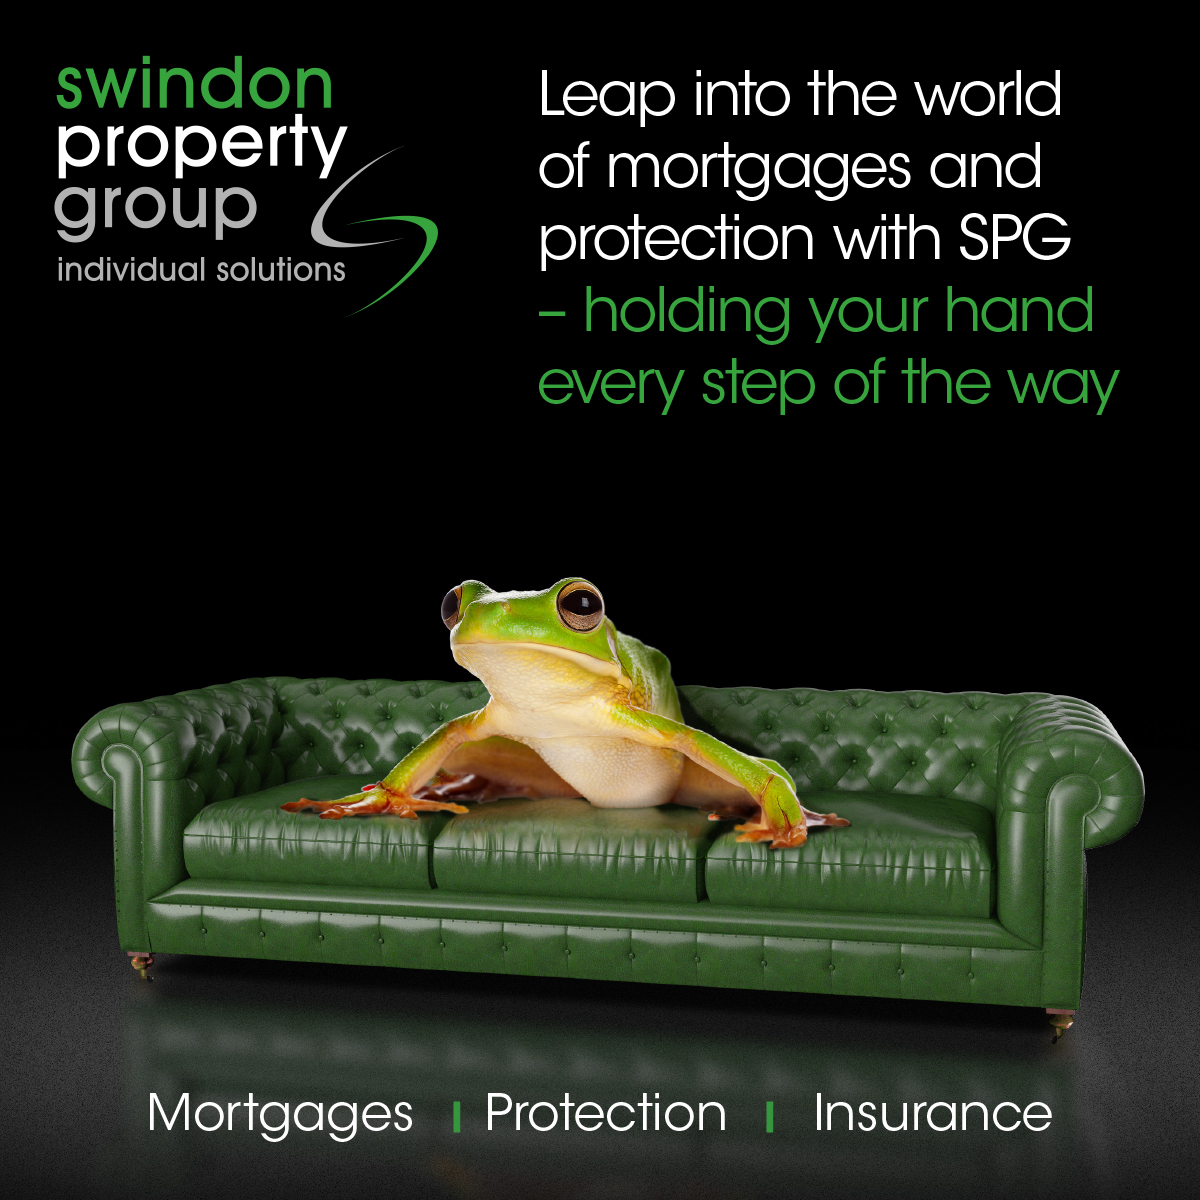 Swindon Property Group Ltd